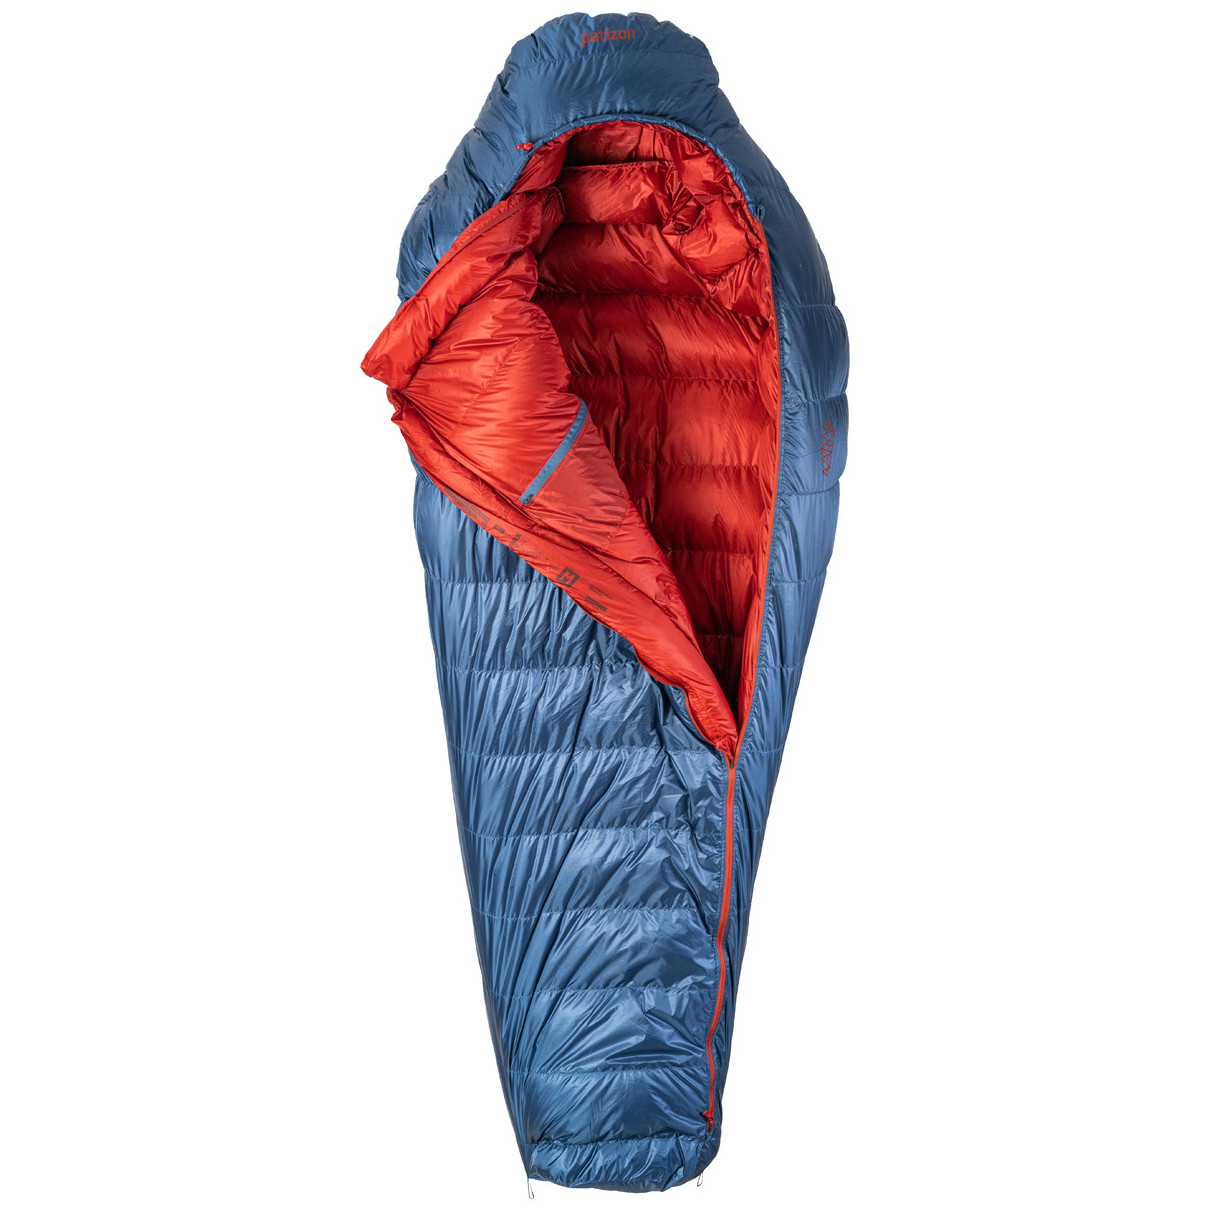 Péřový spacák Patizon DPRO 890 L (186-200 cm) Zip: Levý / Barva: modrá